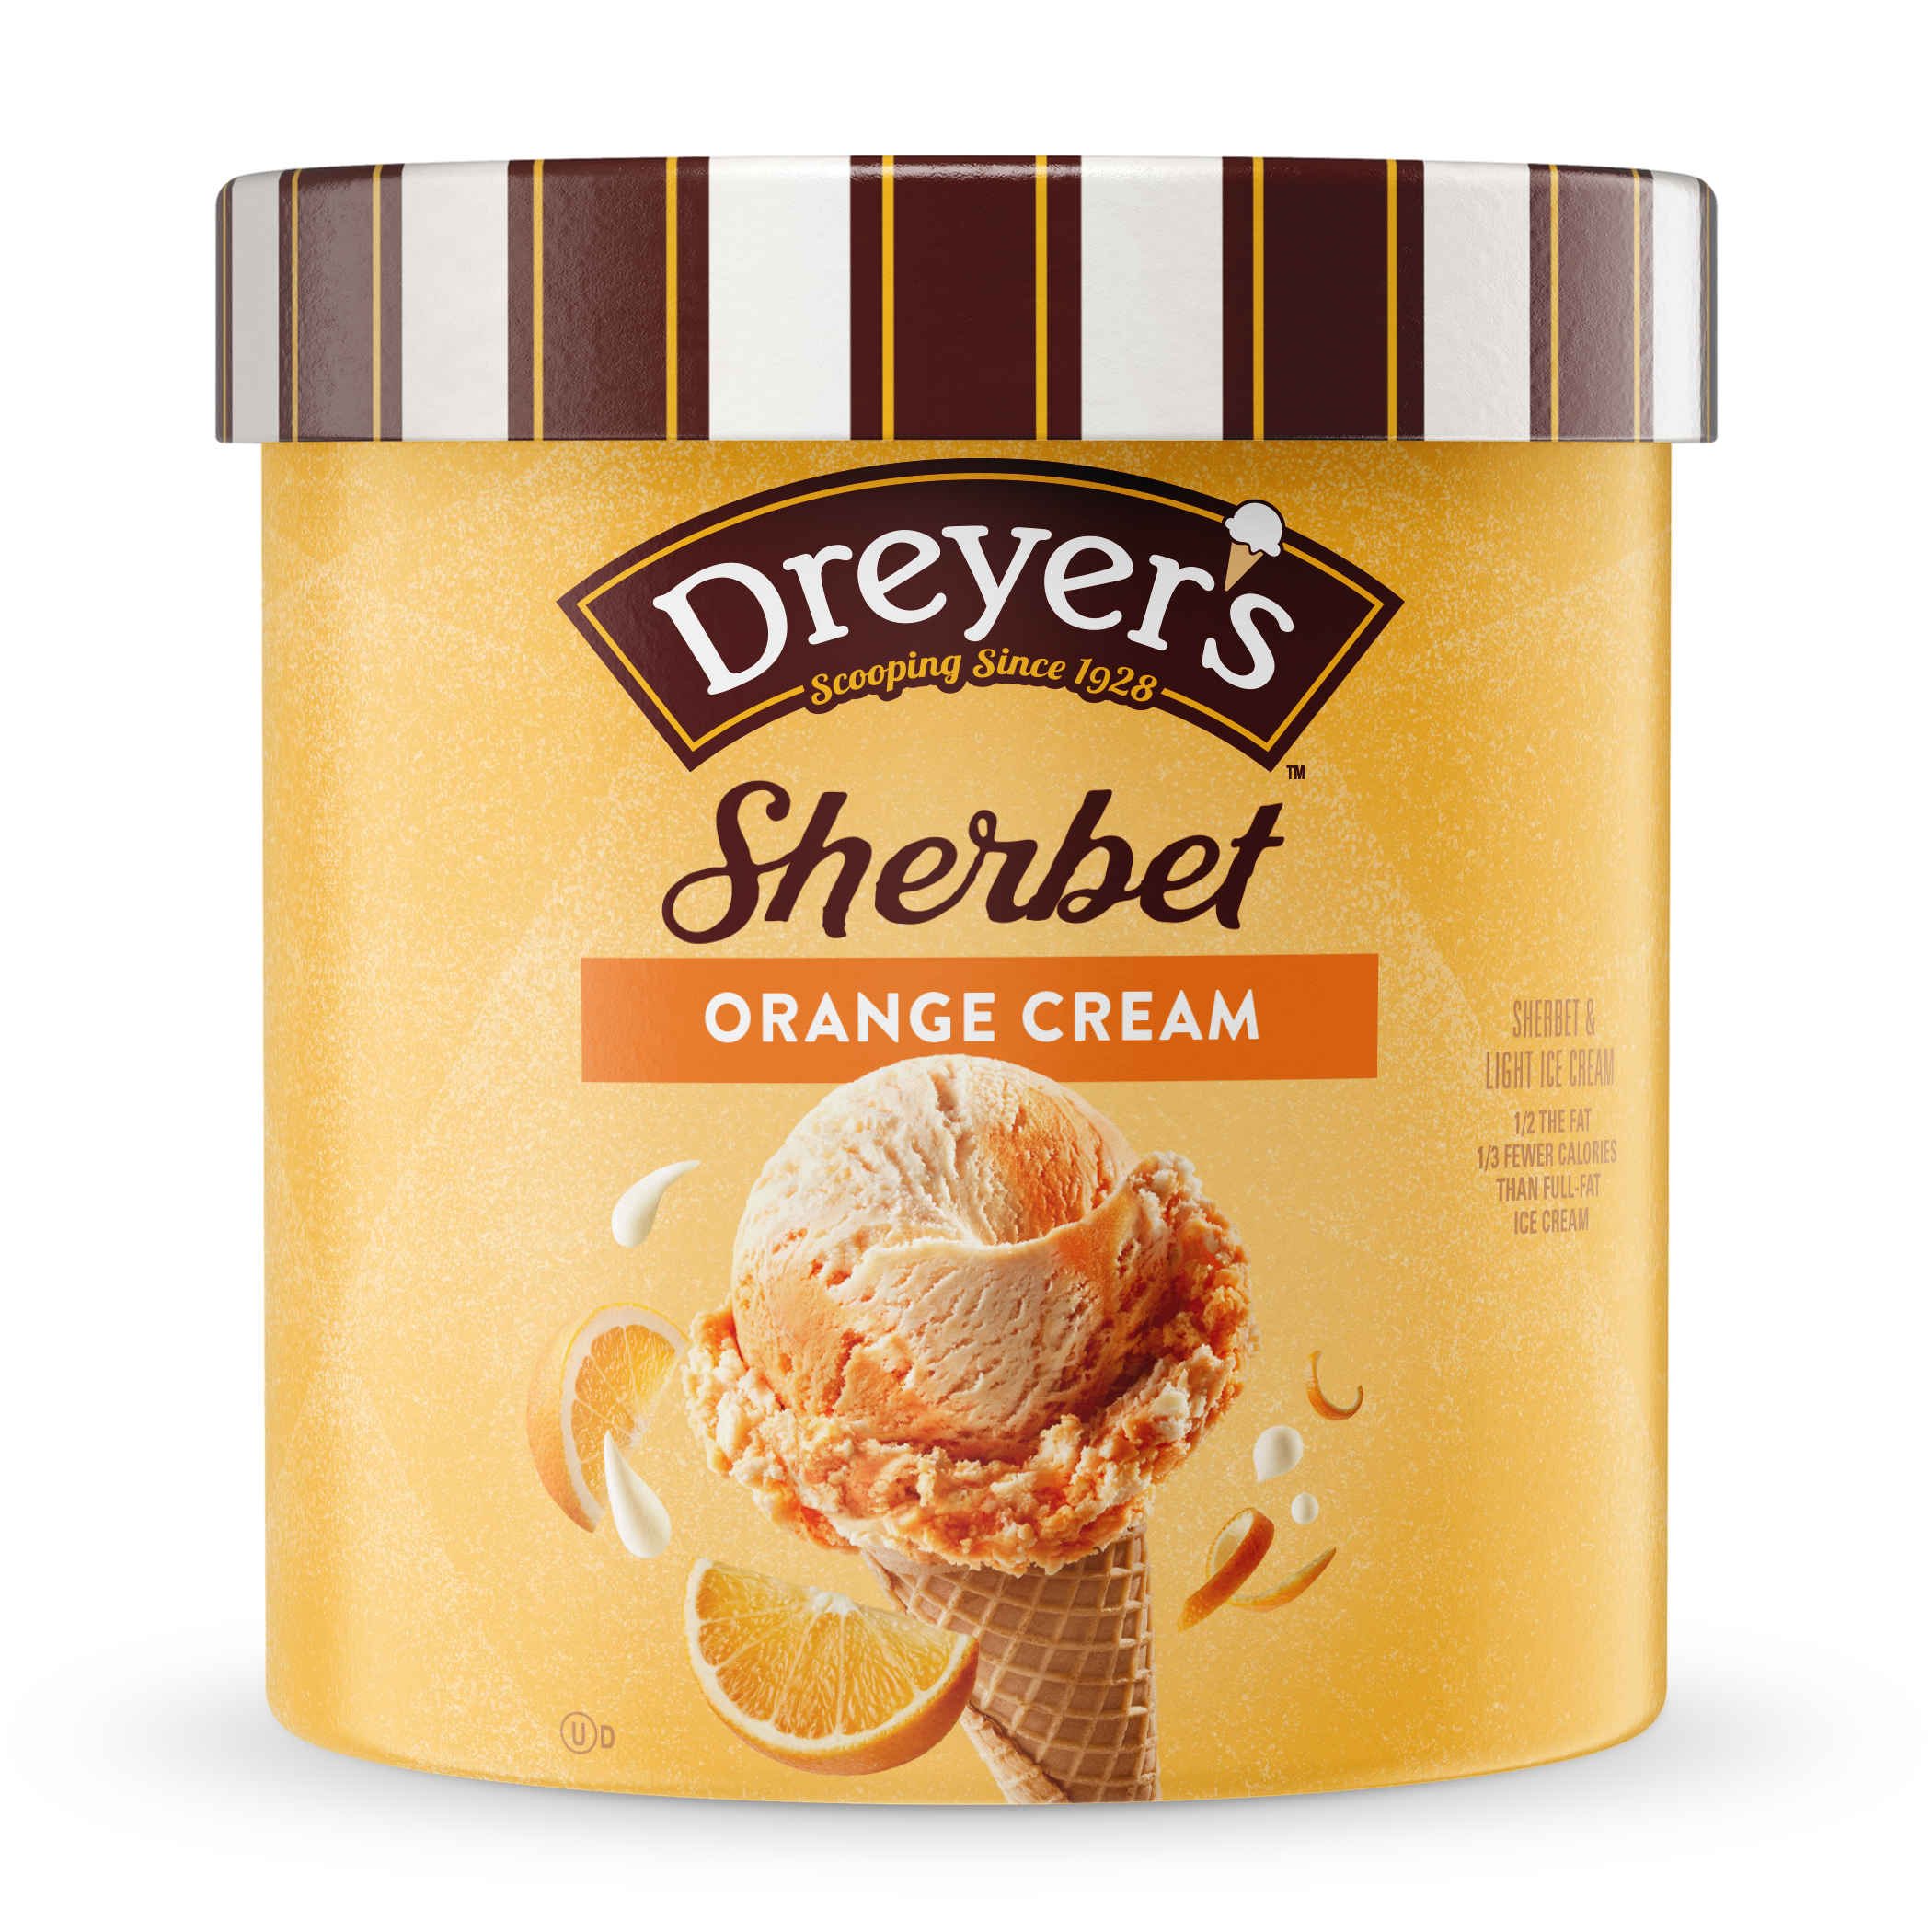 Carton of Dreyer's orange cream sherbet